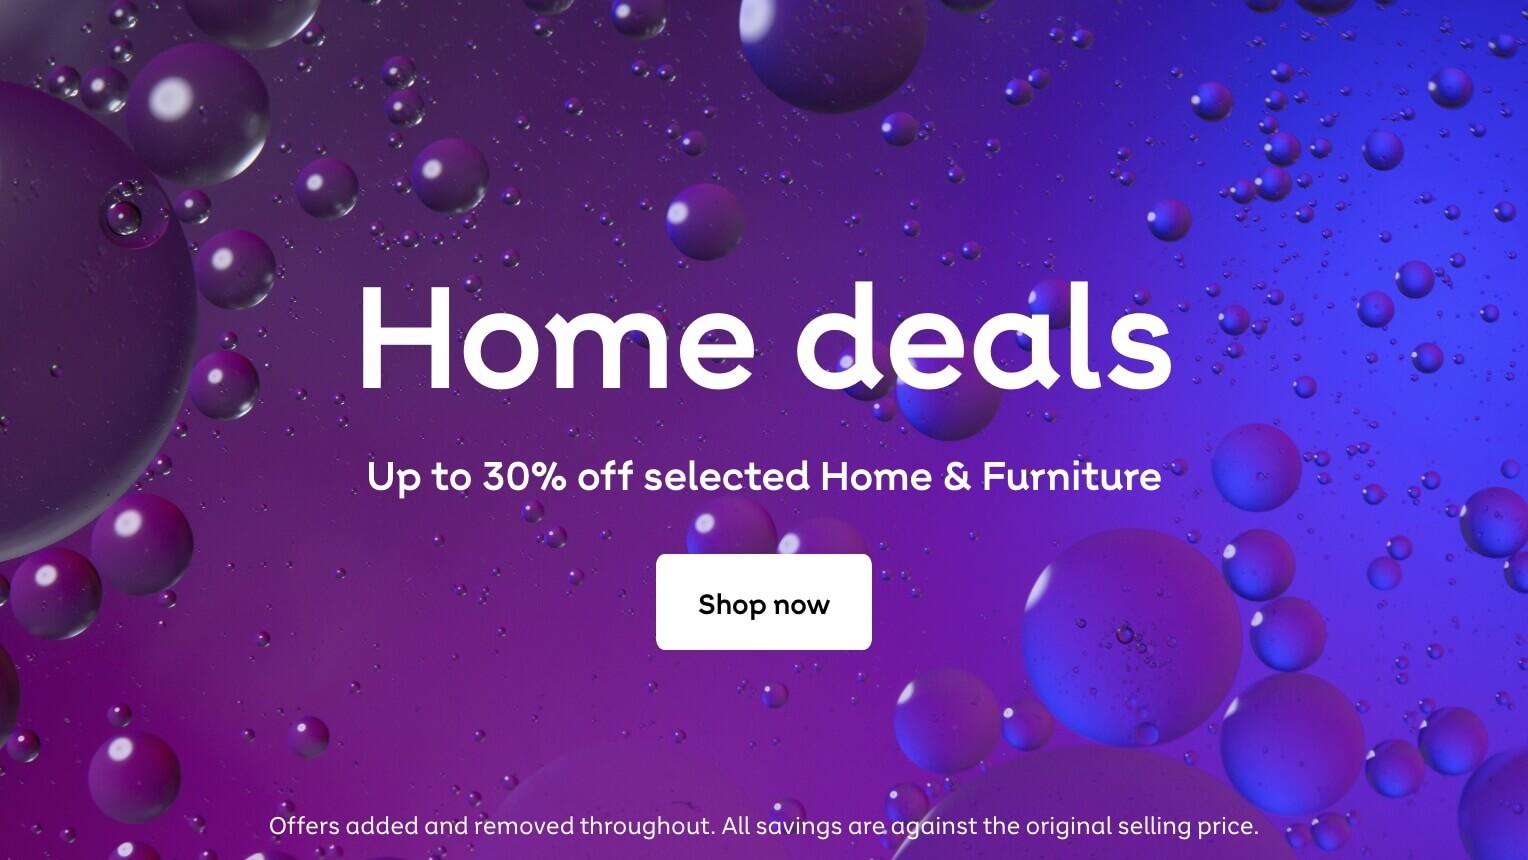 Home & Furniture sale